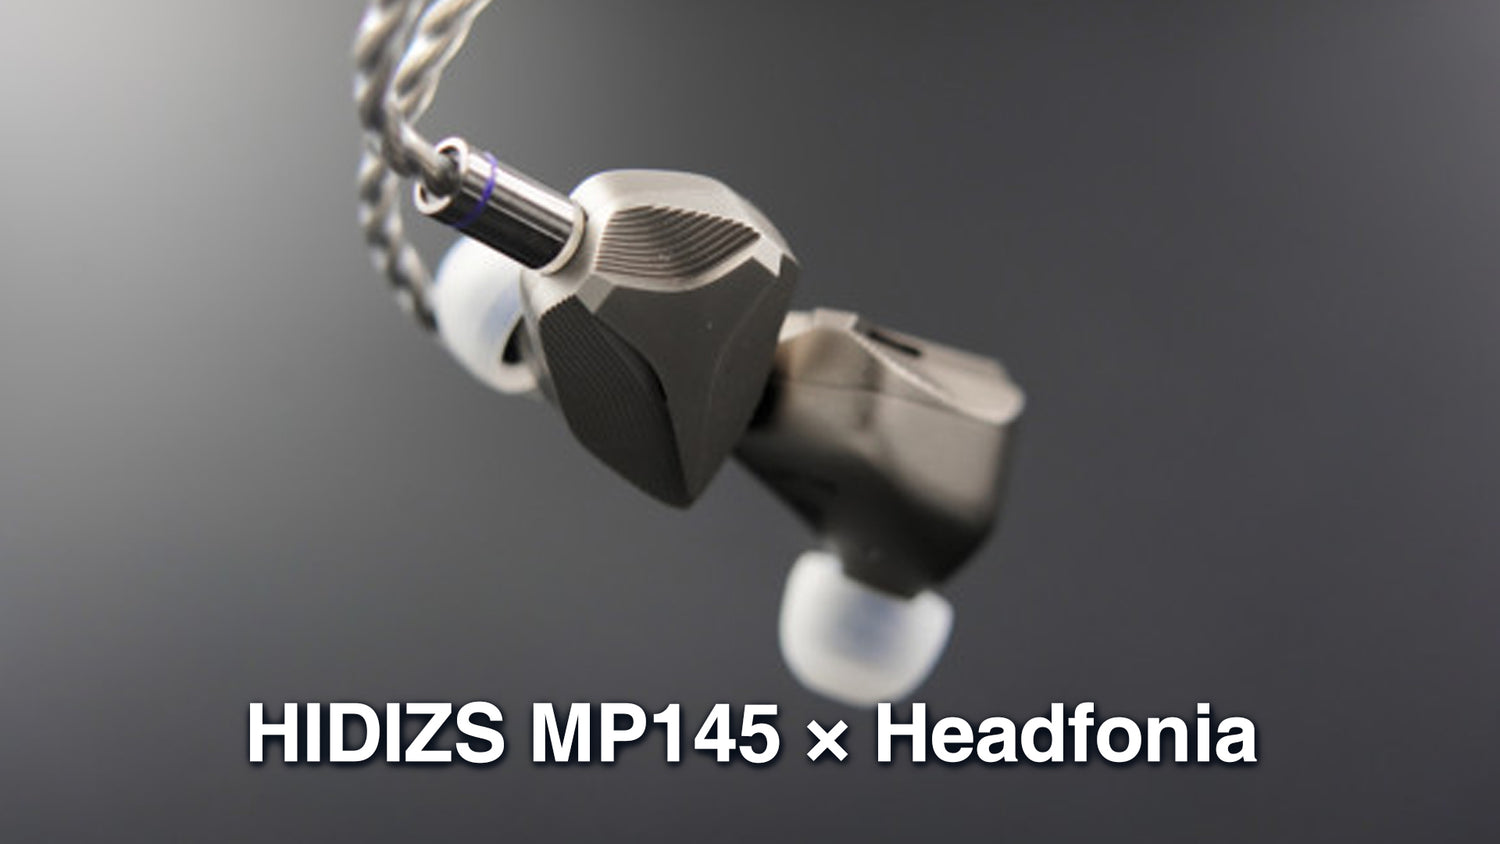 HIDIZS MP145 Review - Headfonia